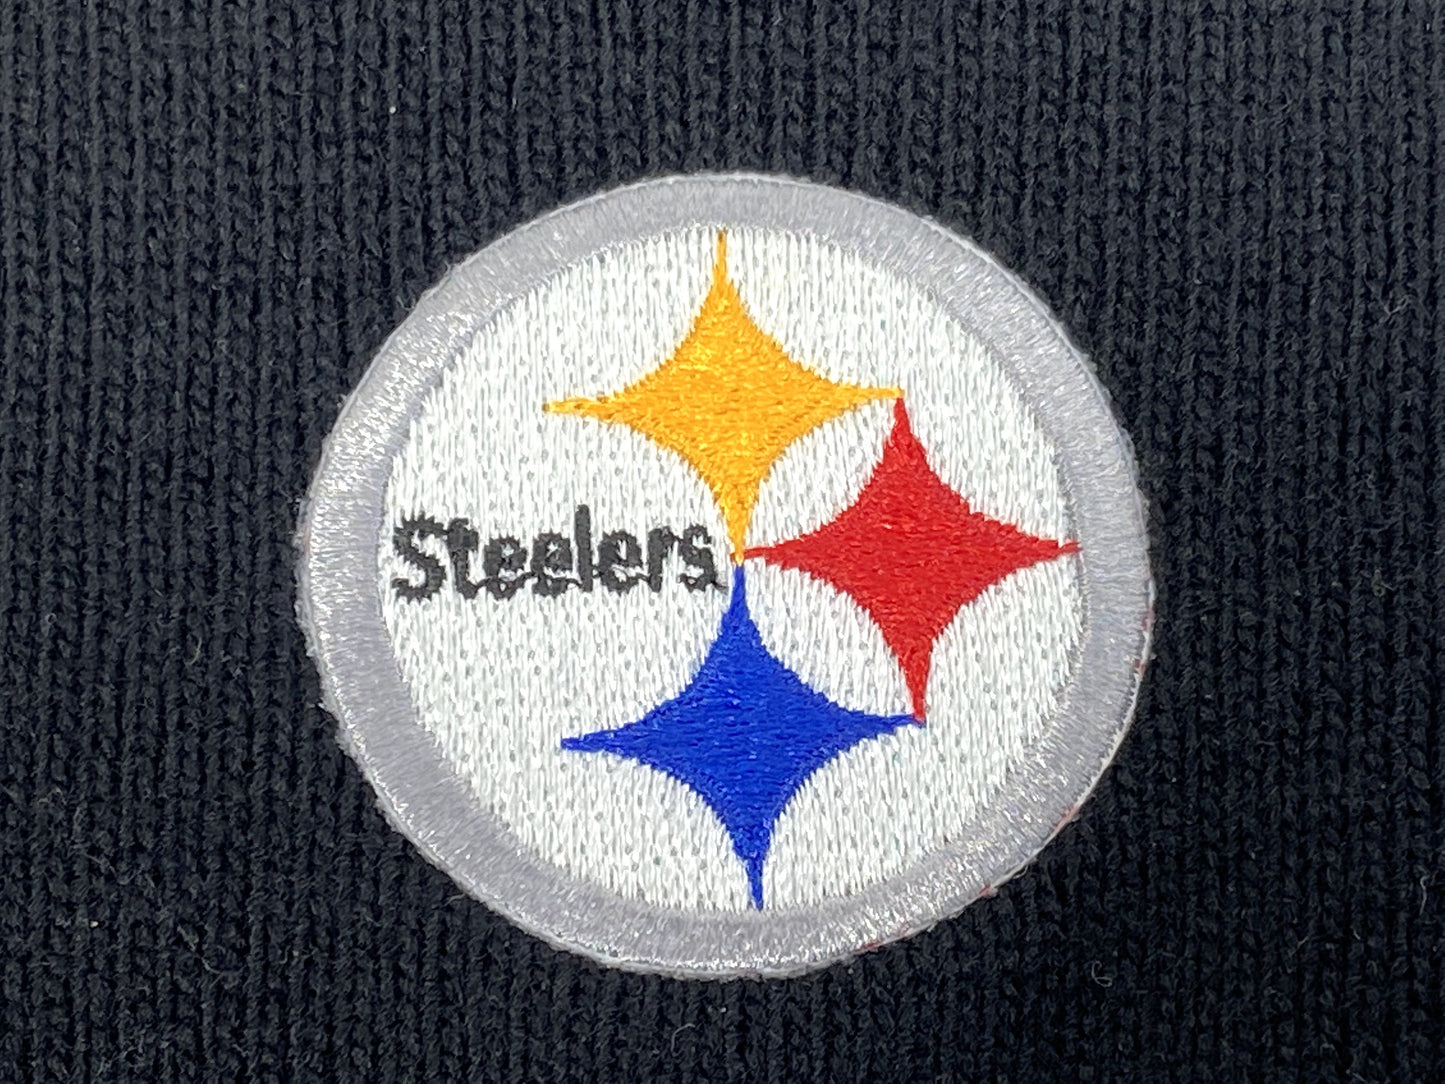 Pittsburgh Steelers Vintage NFL Black Cuffed Logo Knit Hat NOS By Rossmor Industries